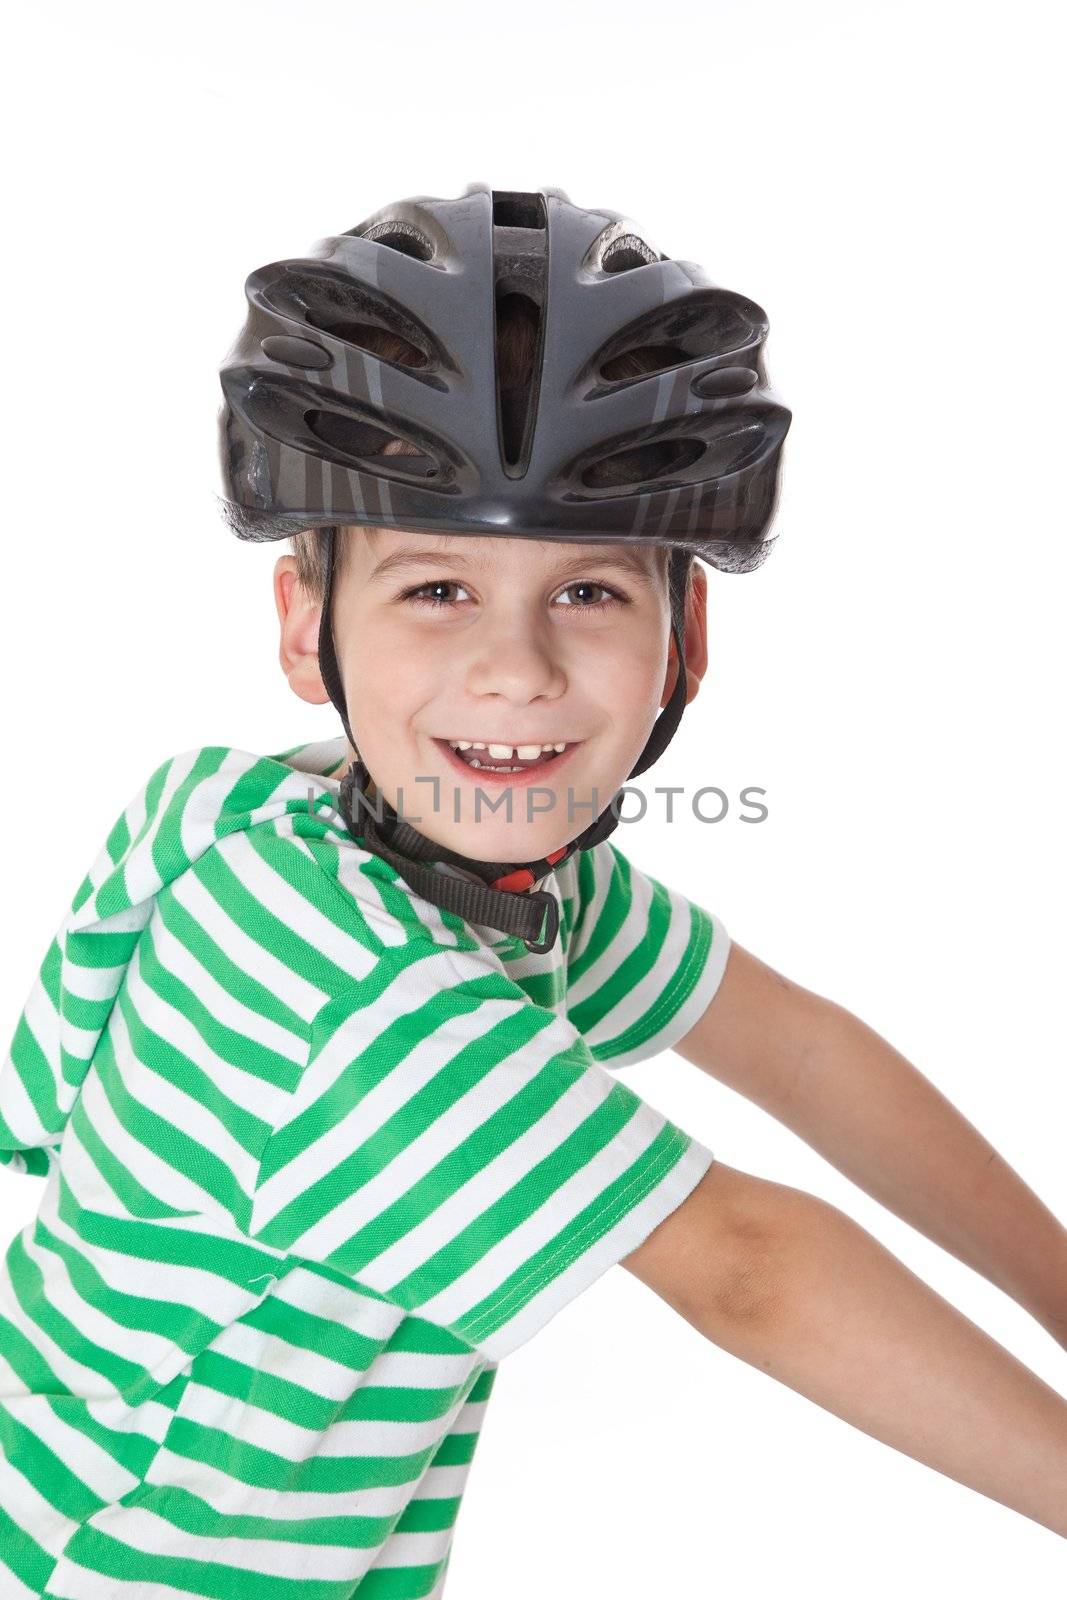 Boy bicyclist with helmet by bloodua